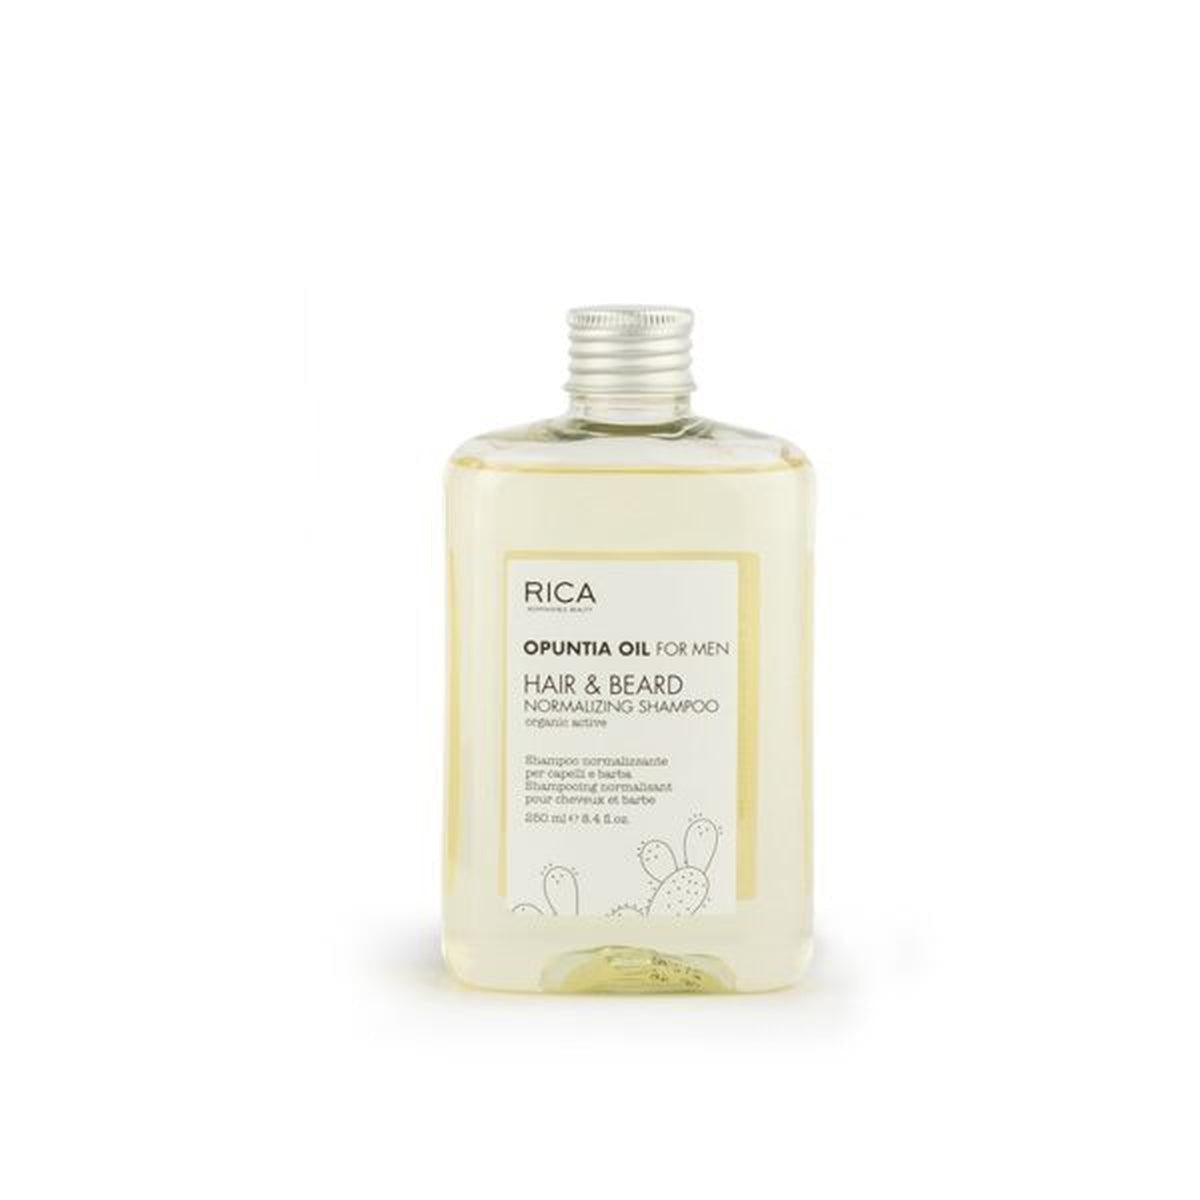 Rica Opuntia Oil for Men Hair and Beard Normalizing Shampoo 250ml